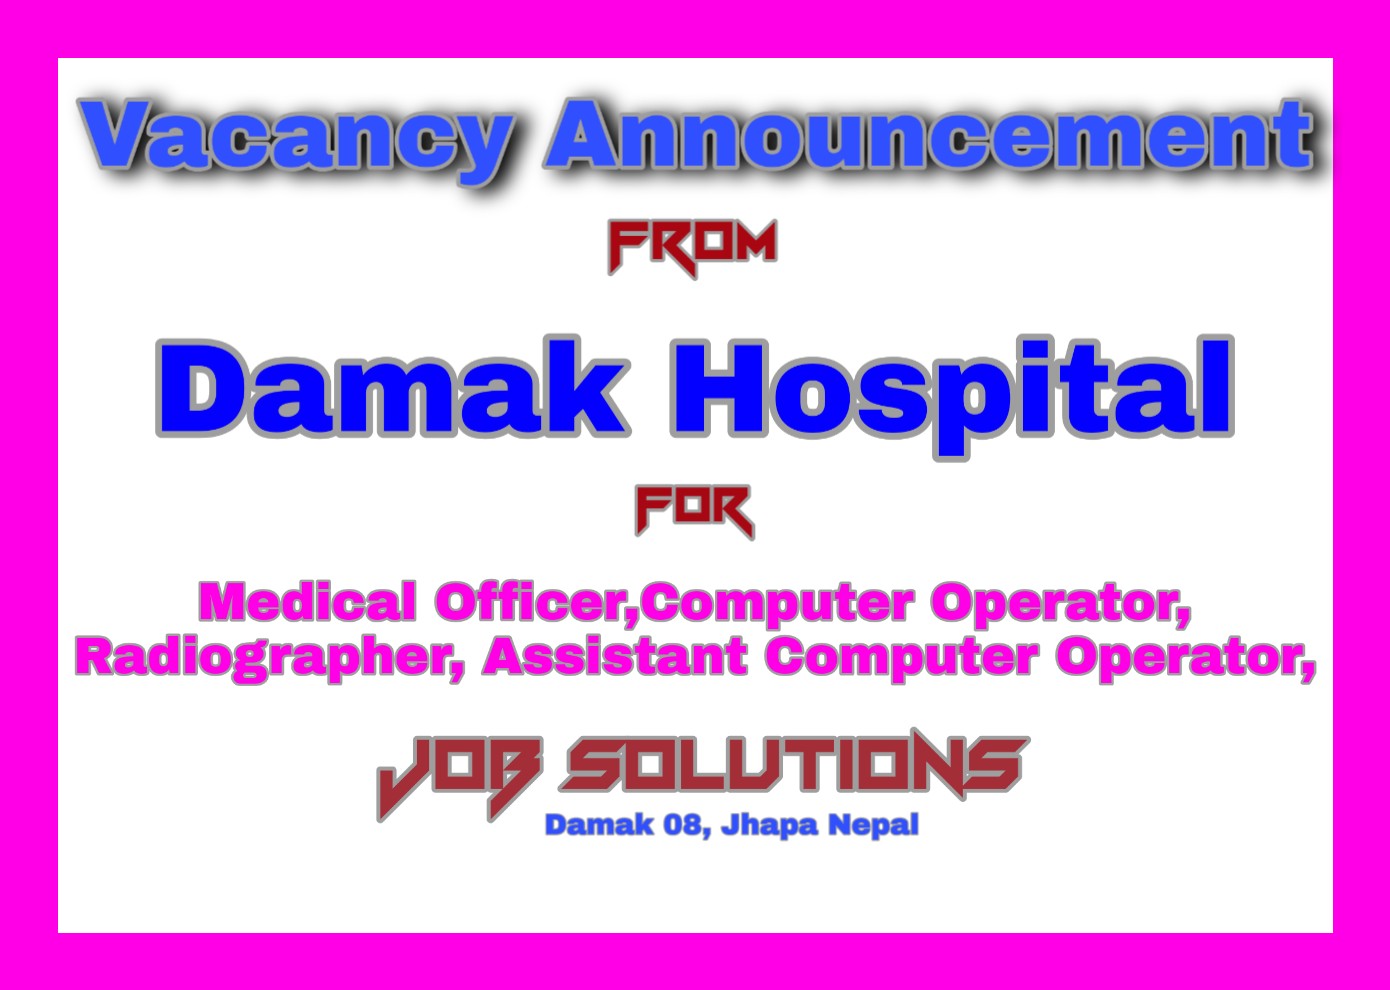 vacancy announcement  -damak hospital-Job Solutions, Jobs In Nepal,damak hospital vacancy,recent job vacancy in jhapa, damak amda hospital vacancy